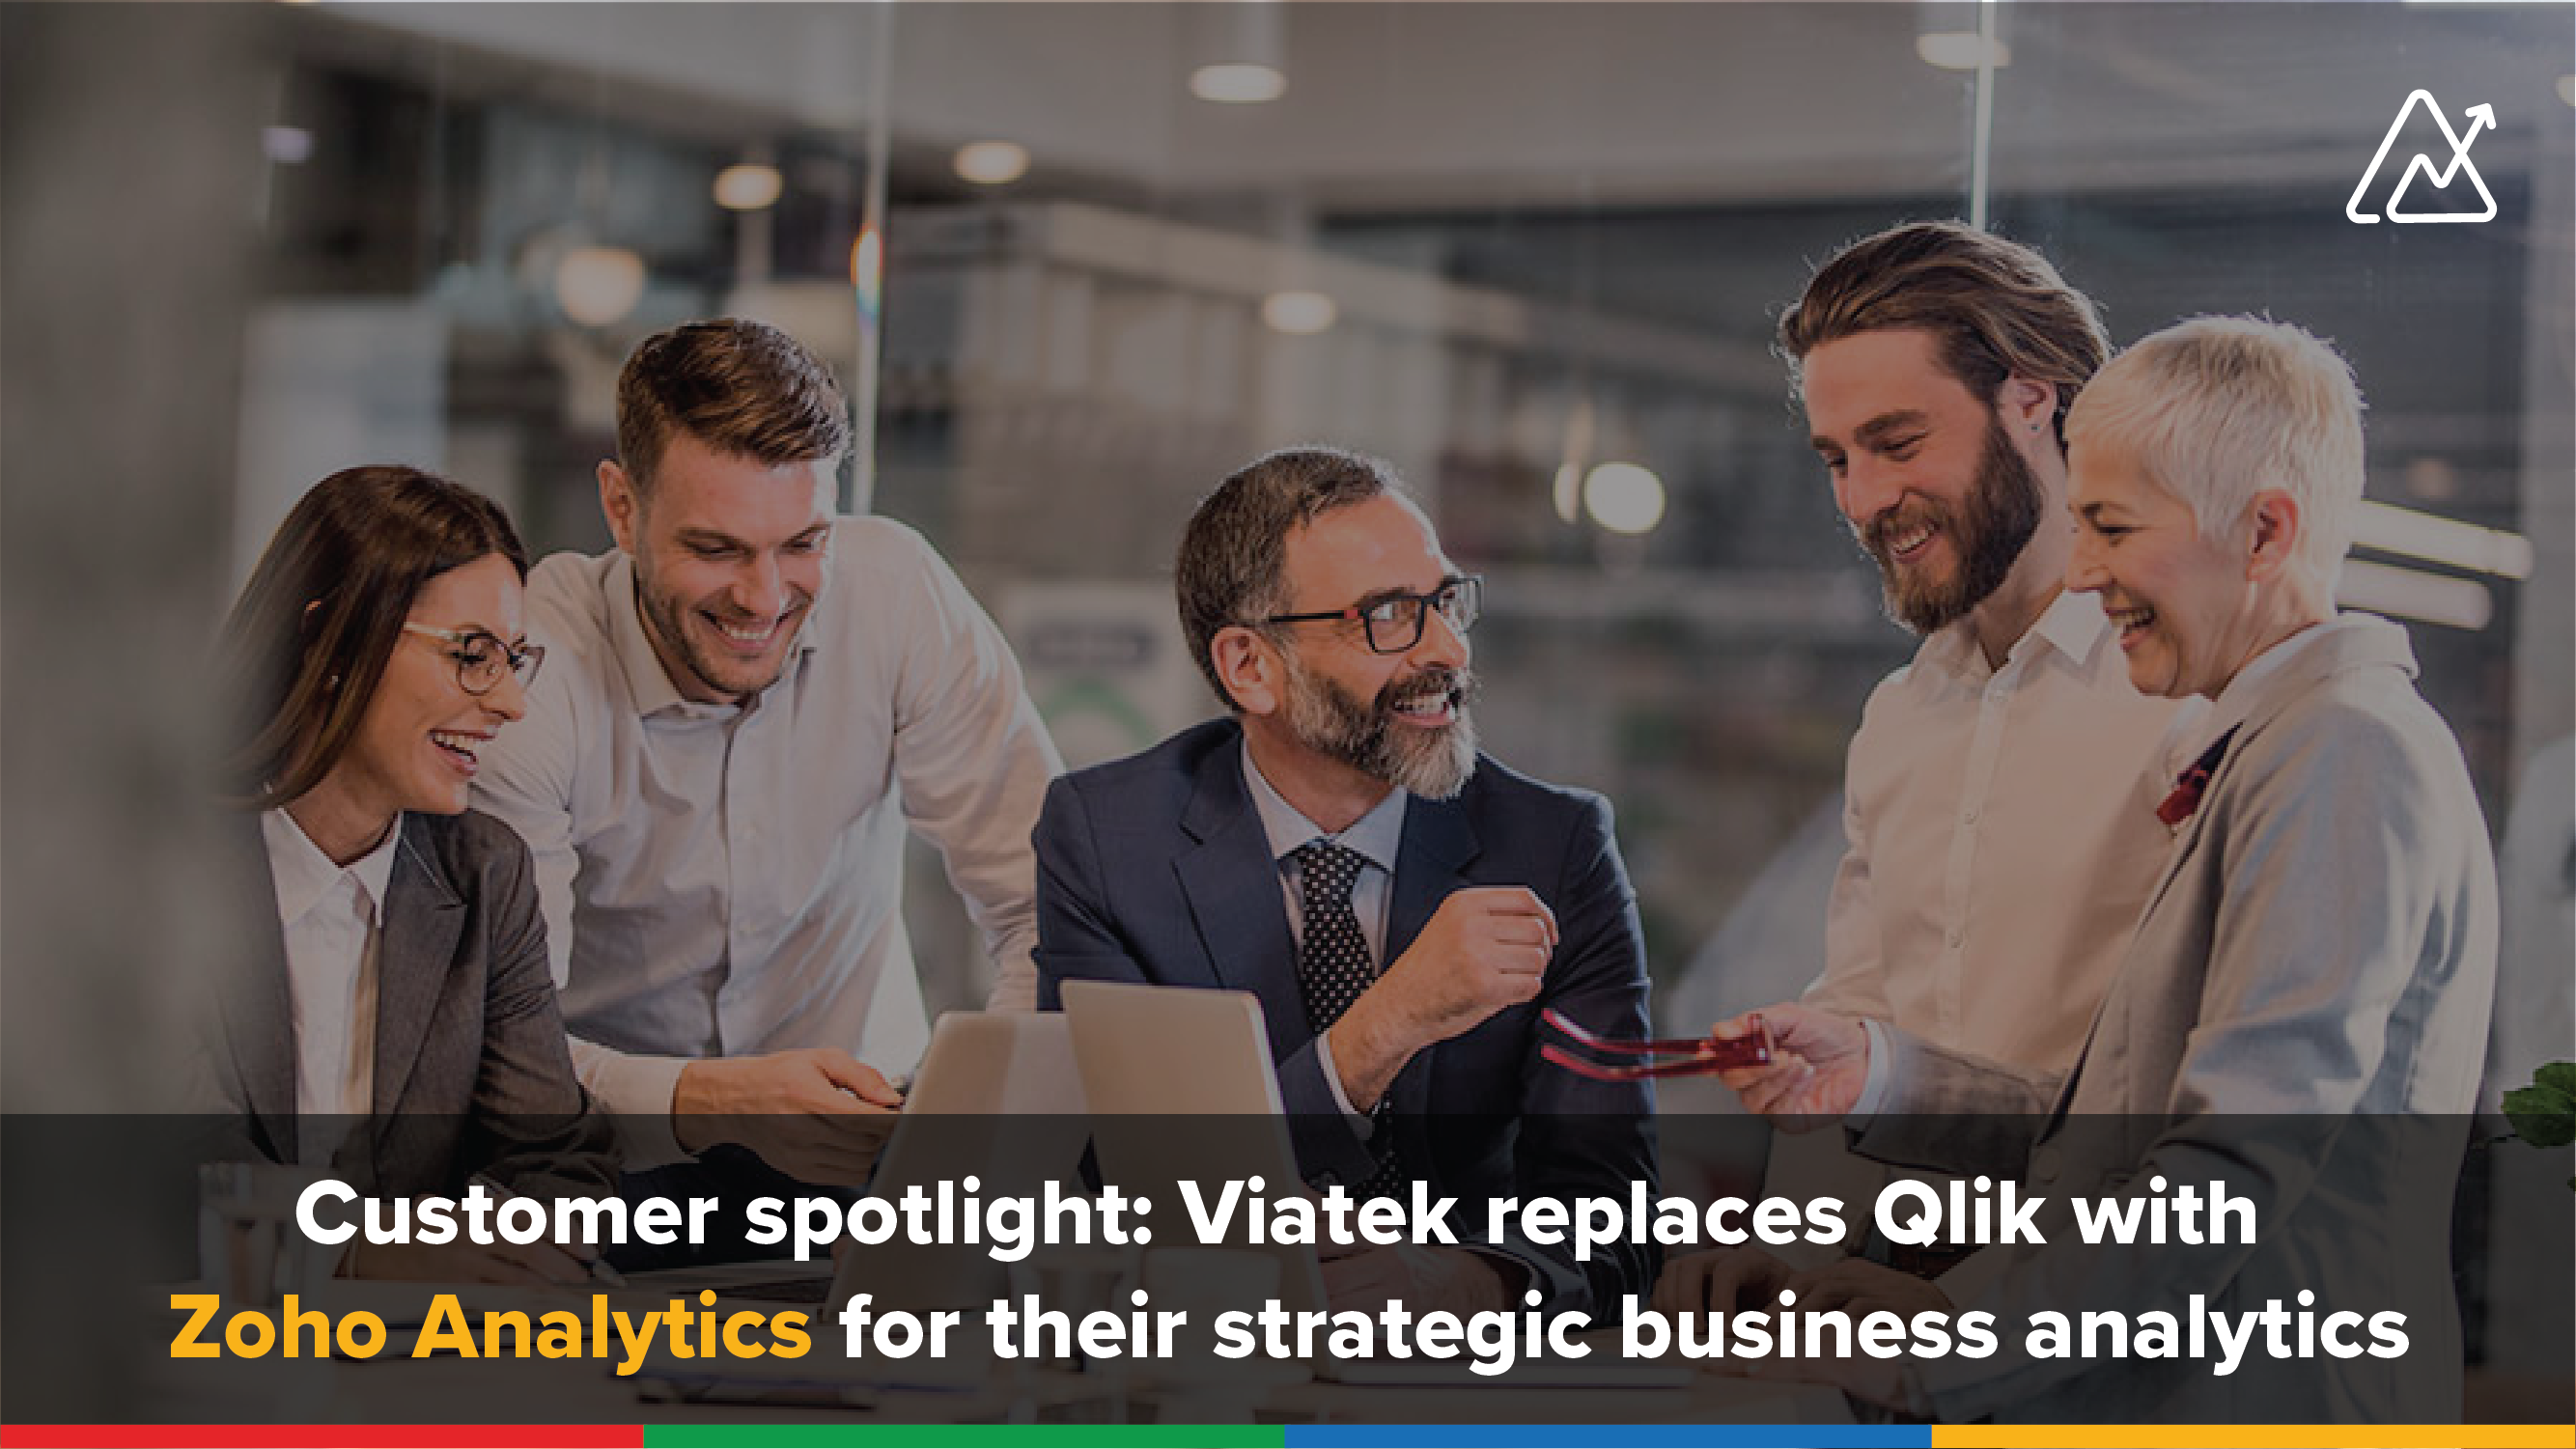 Viatek replaces Qlik with Zoho Analytics for their business analytics